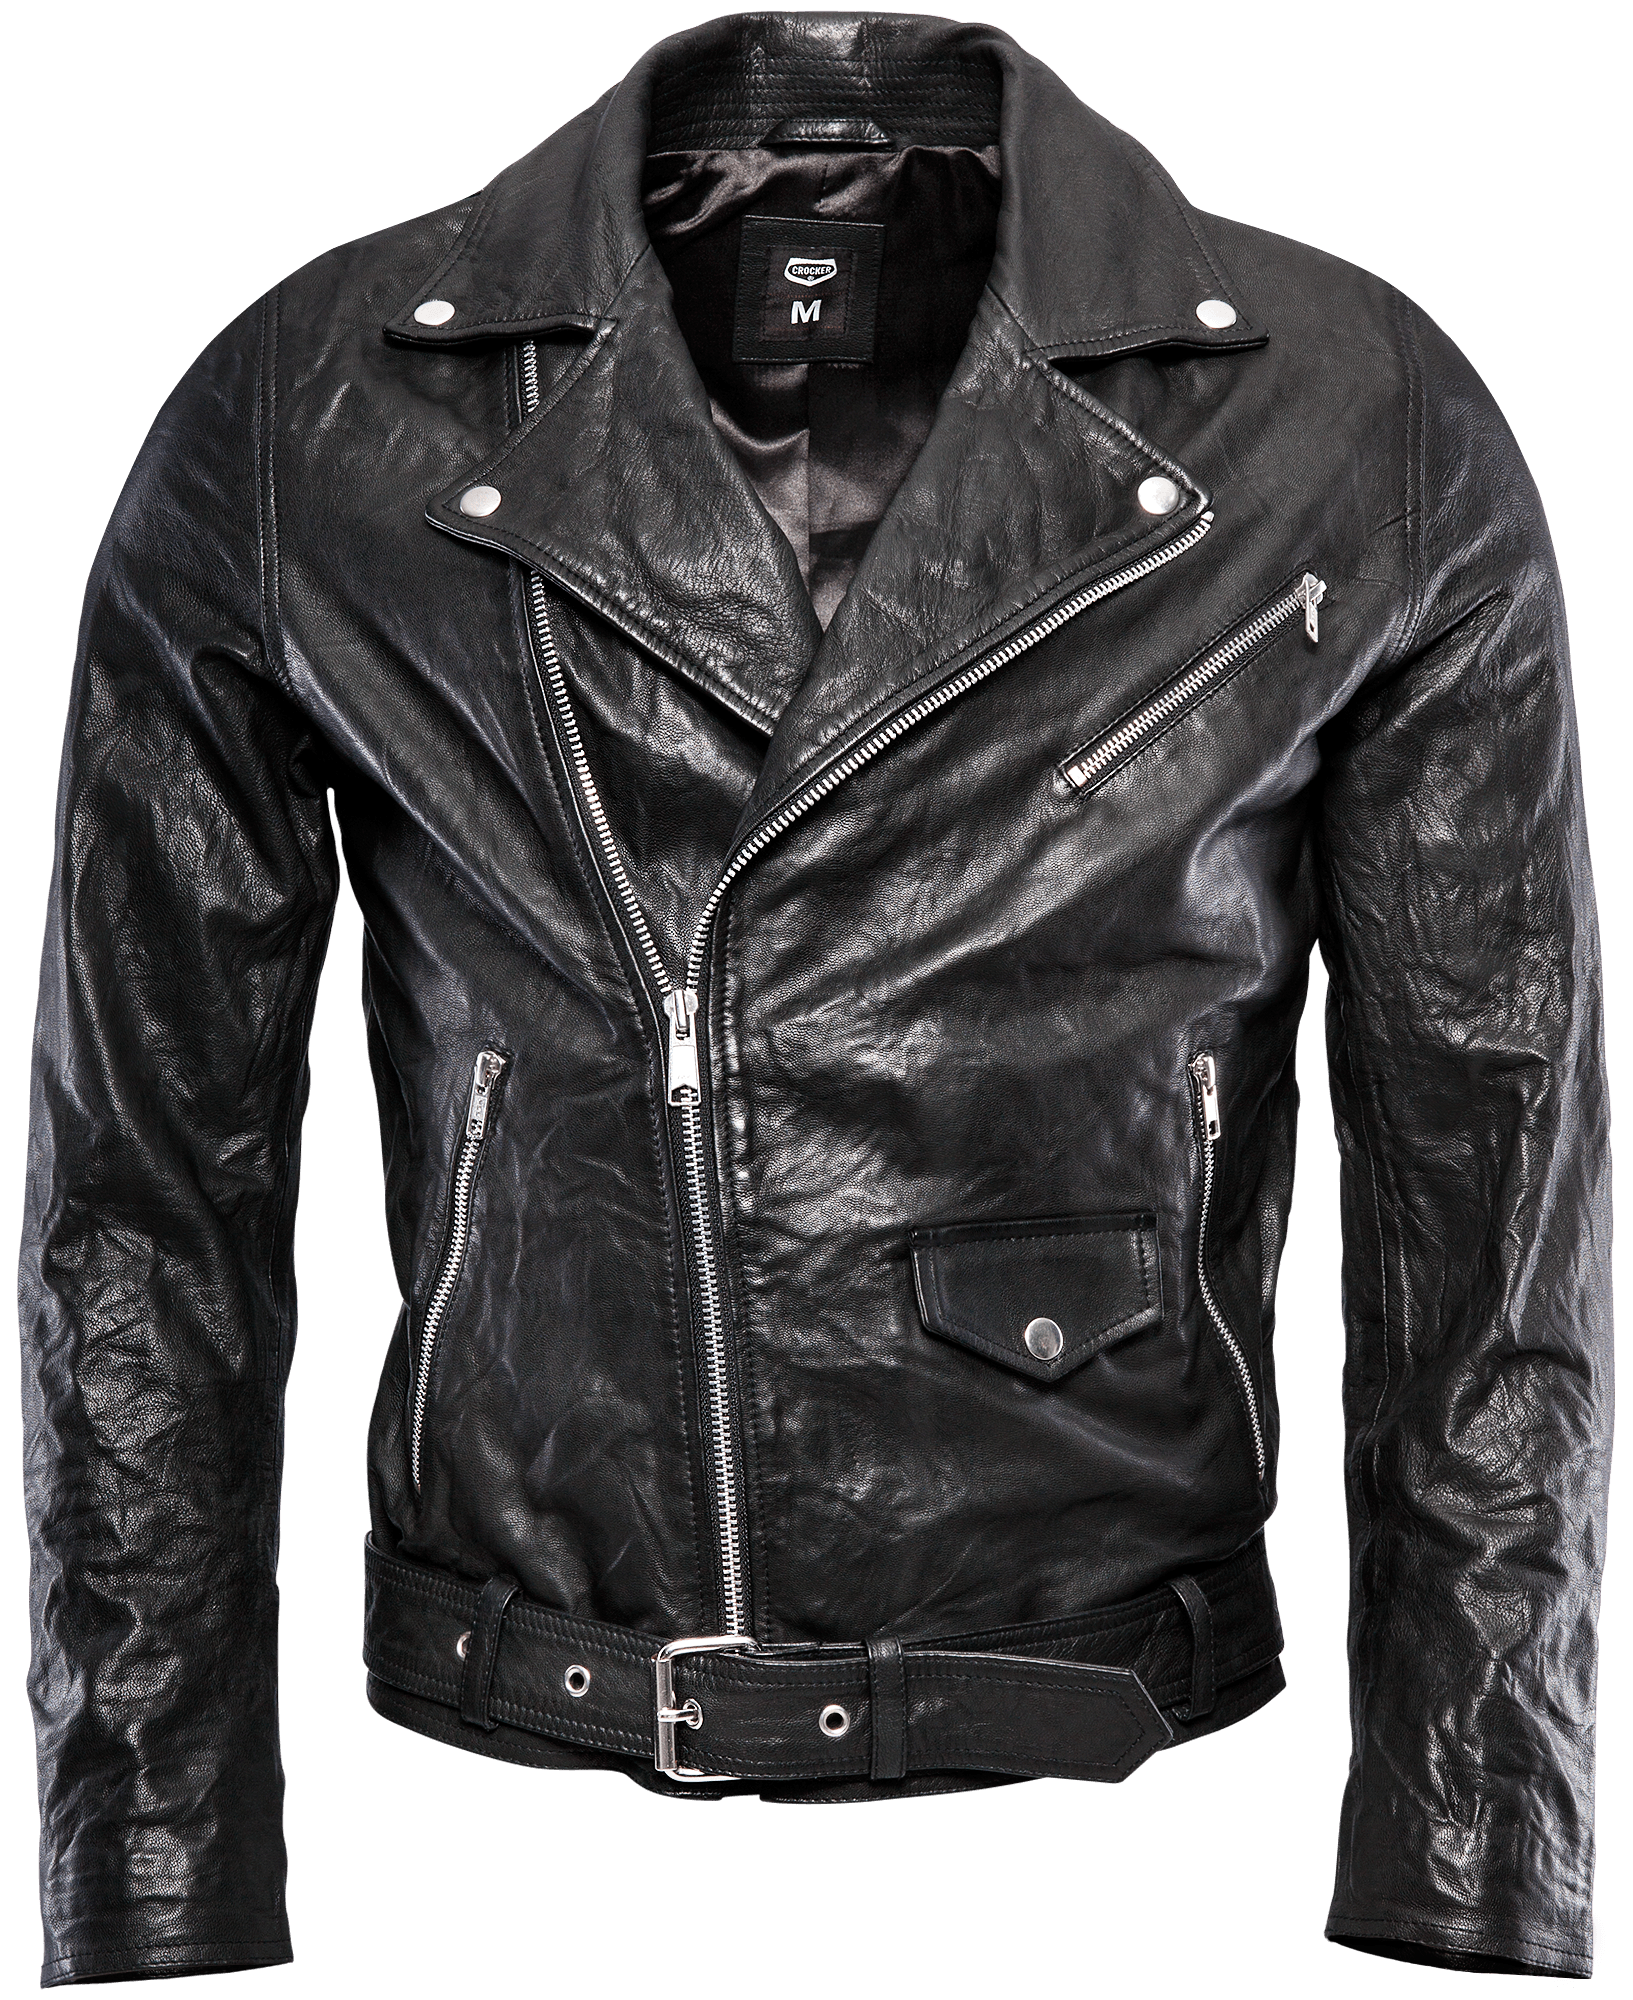 Leather Jacket Pic Black Download HQ PNG Image